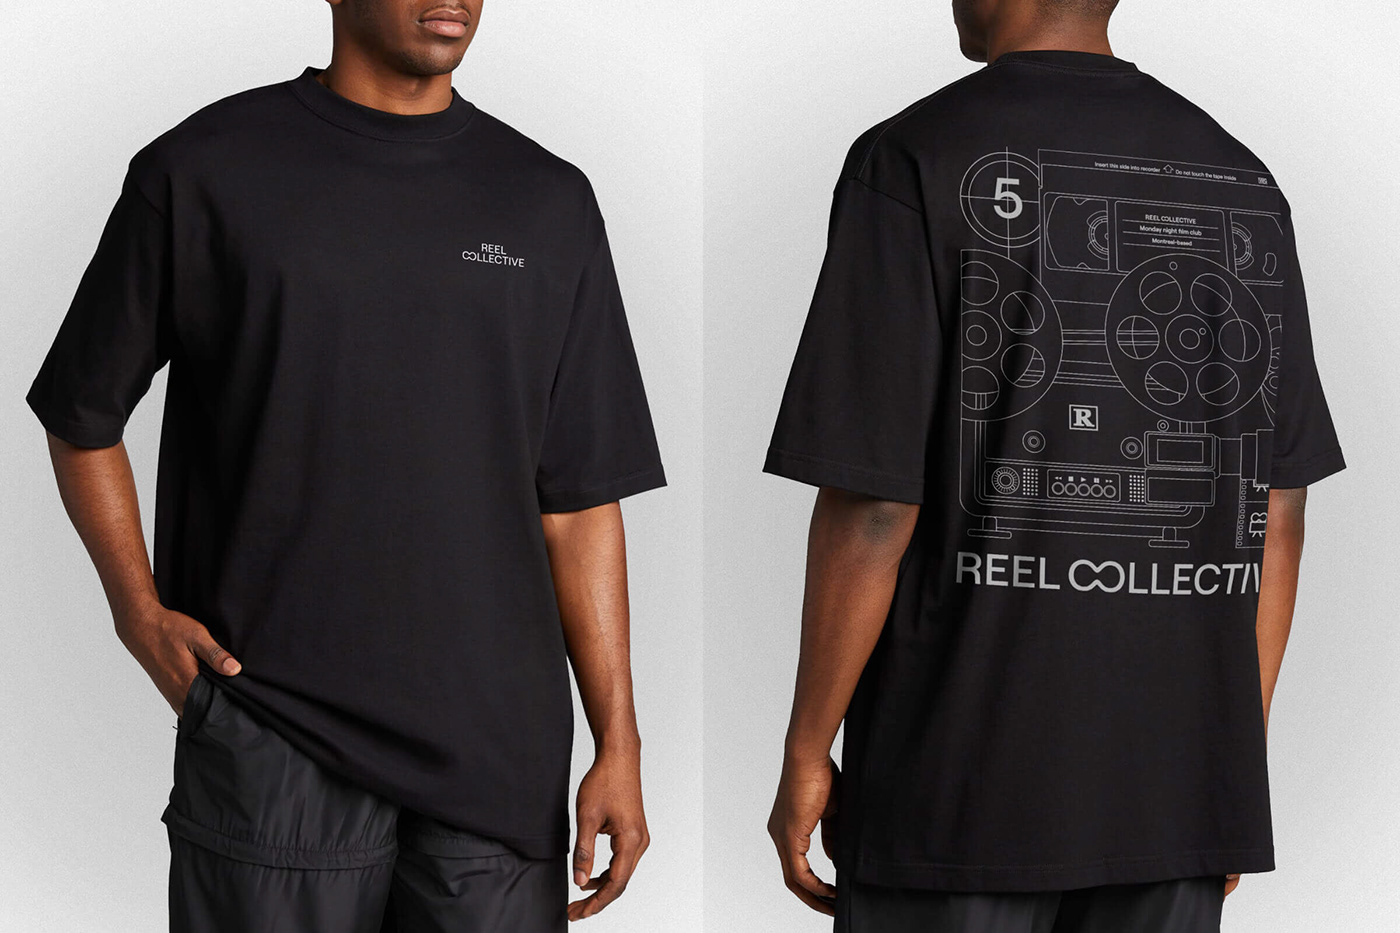 Custom Reel Collective illustration screen printed on black t-shirt merchandise.